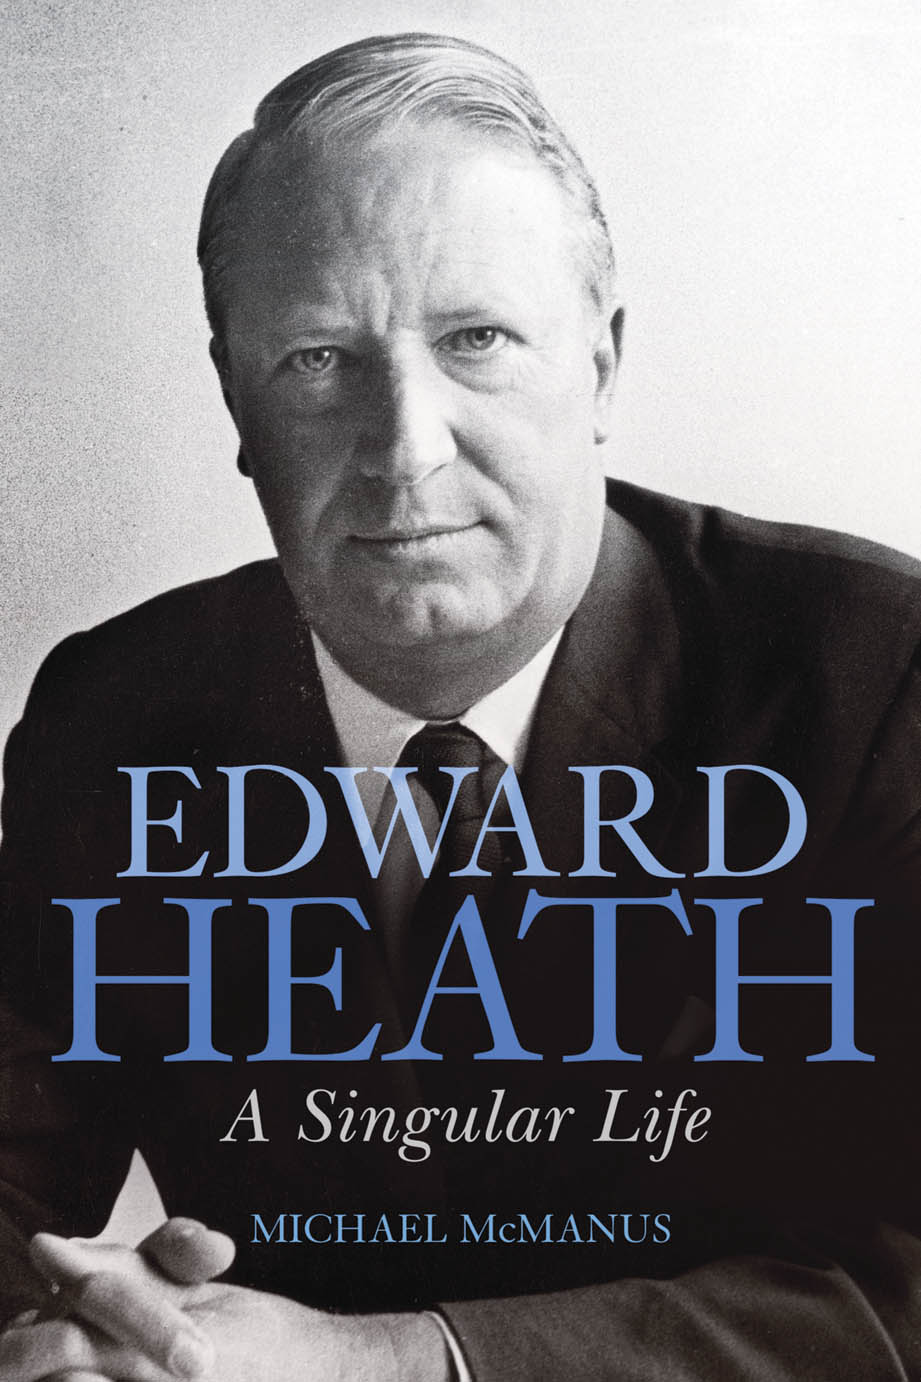 Edward heath